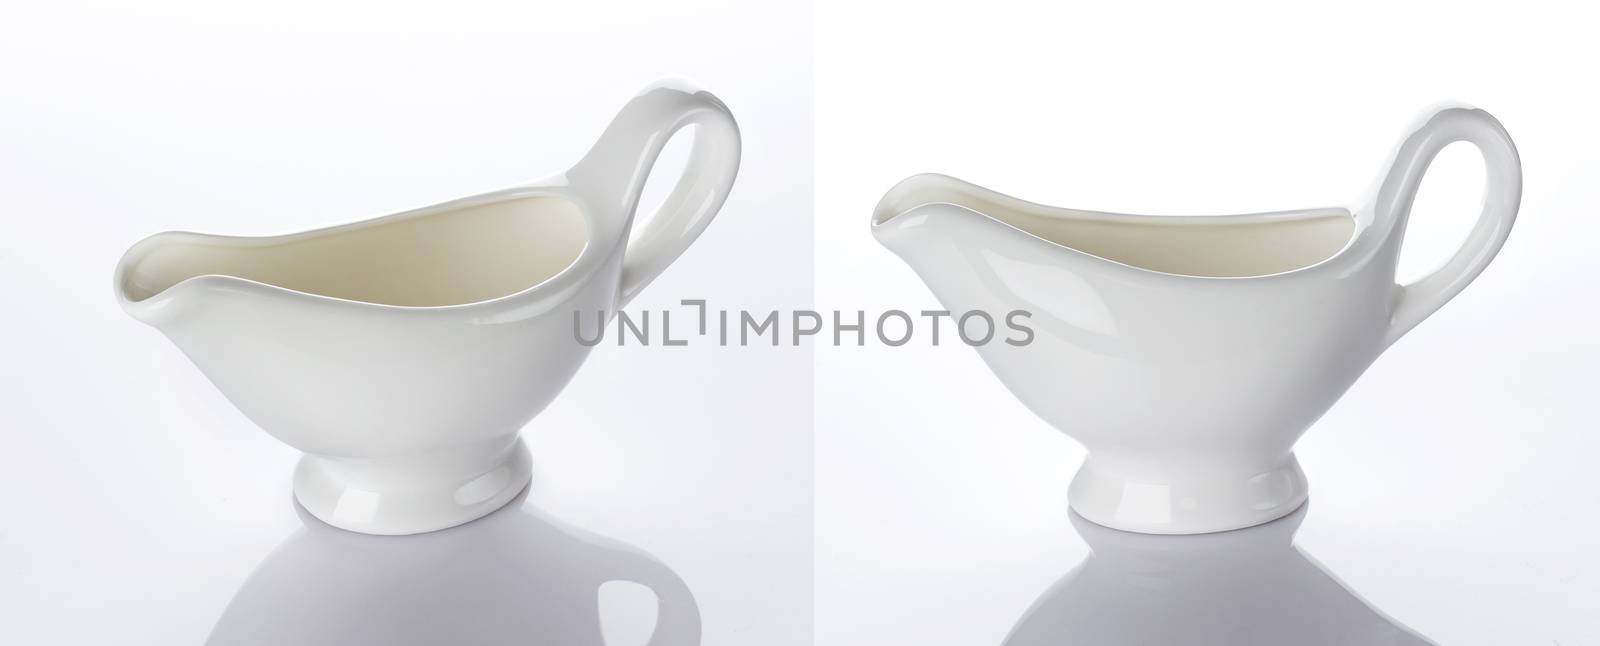 Empty ceramic creamer isolated on white background by xamtiw